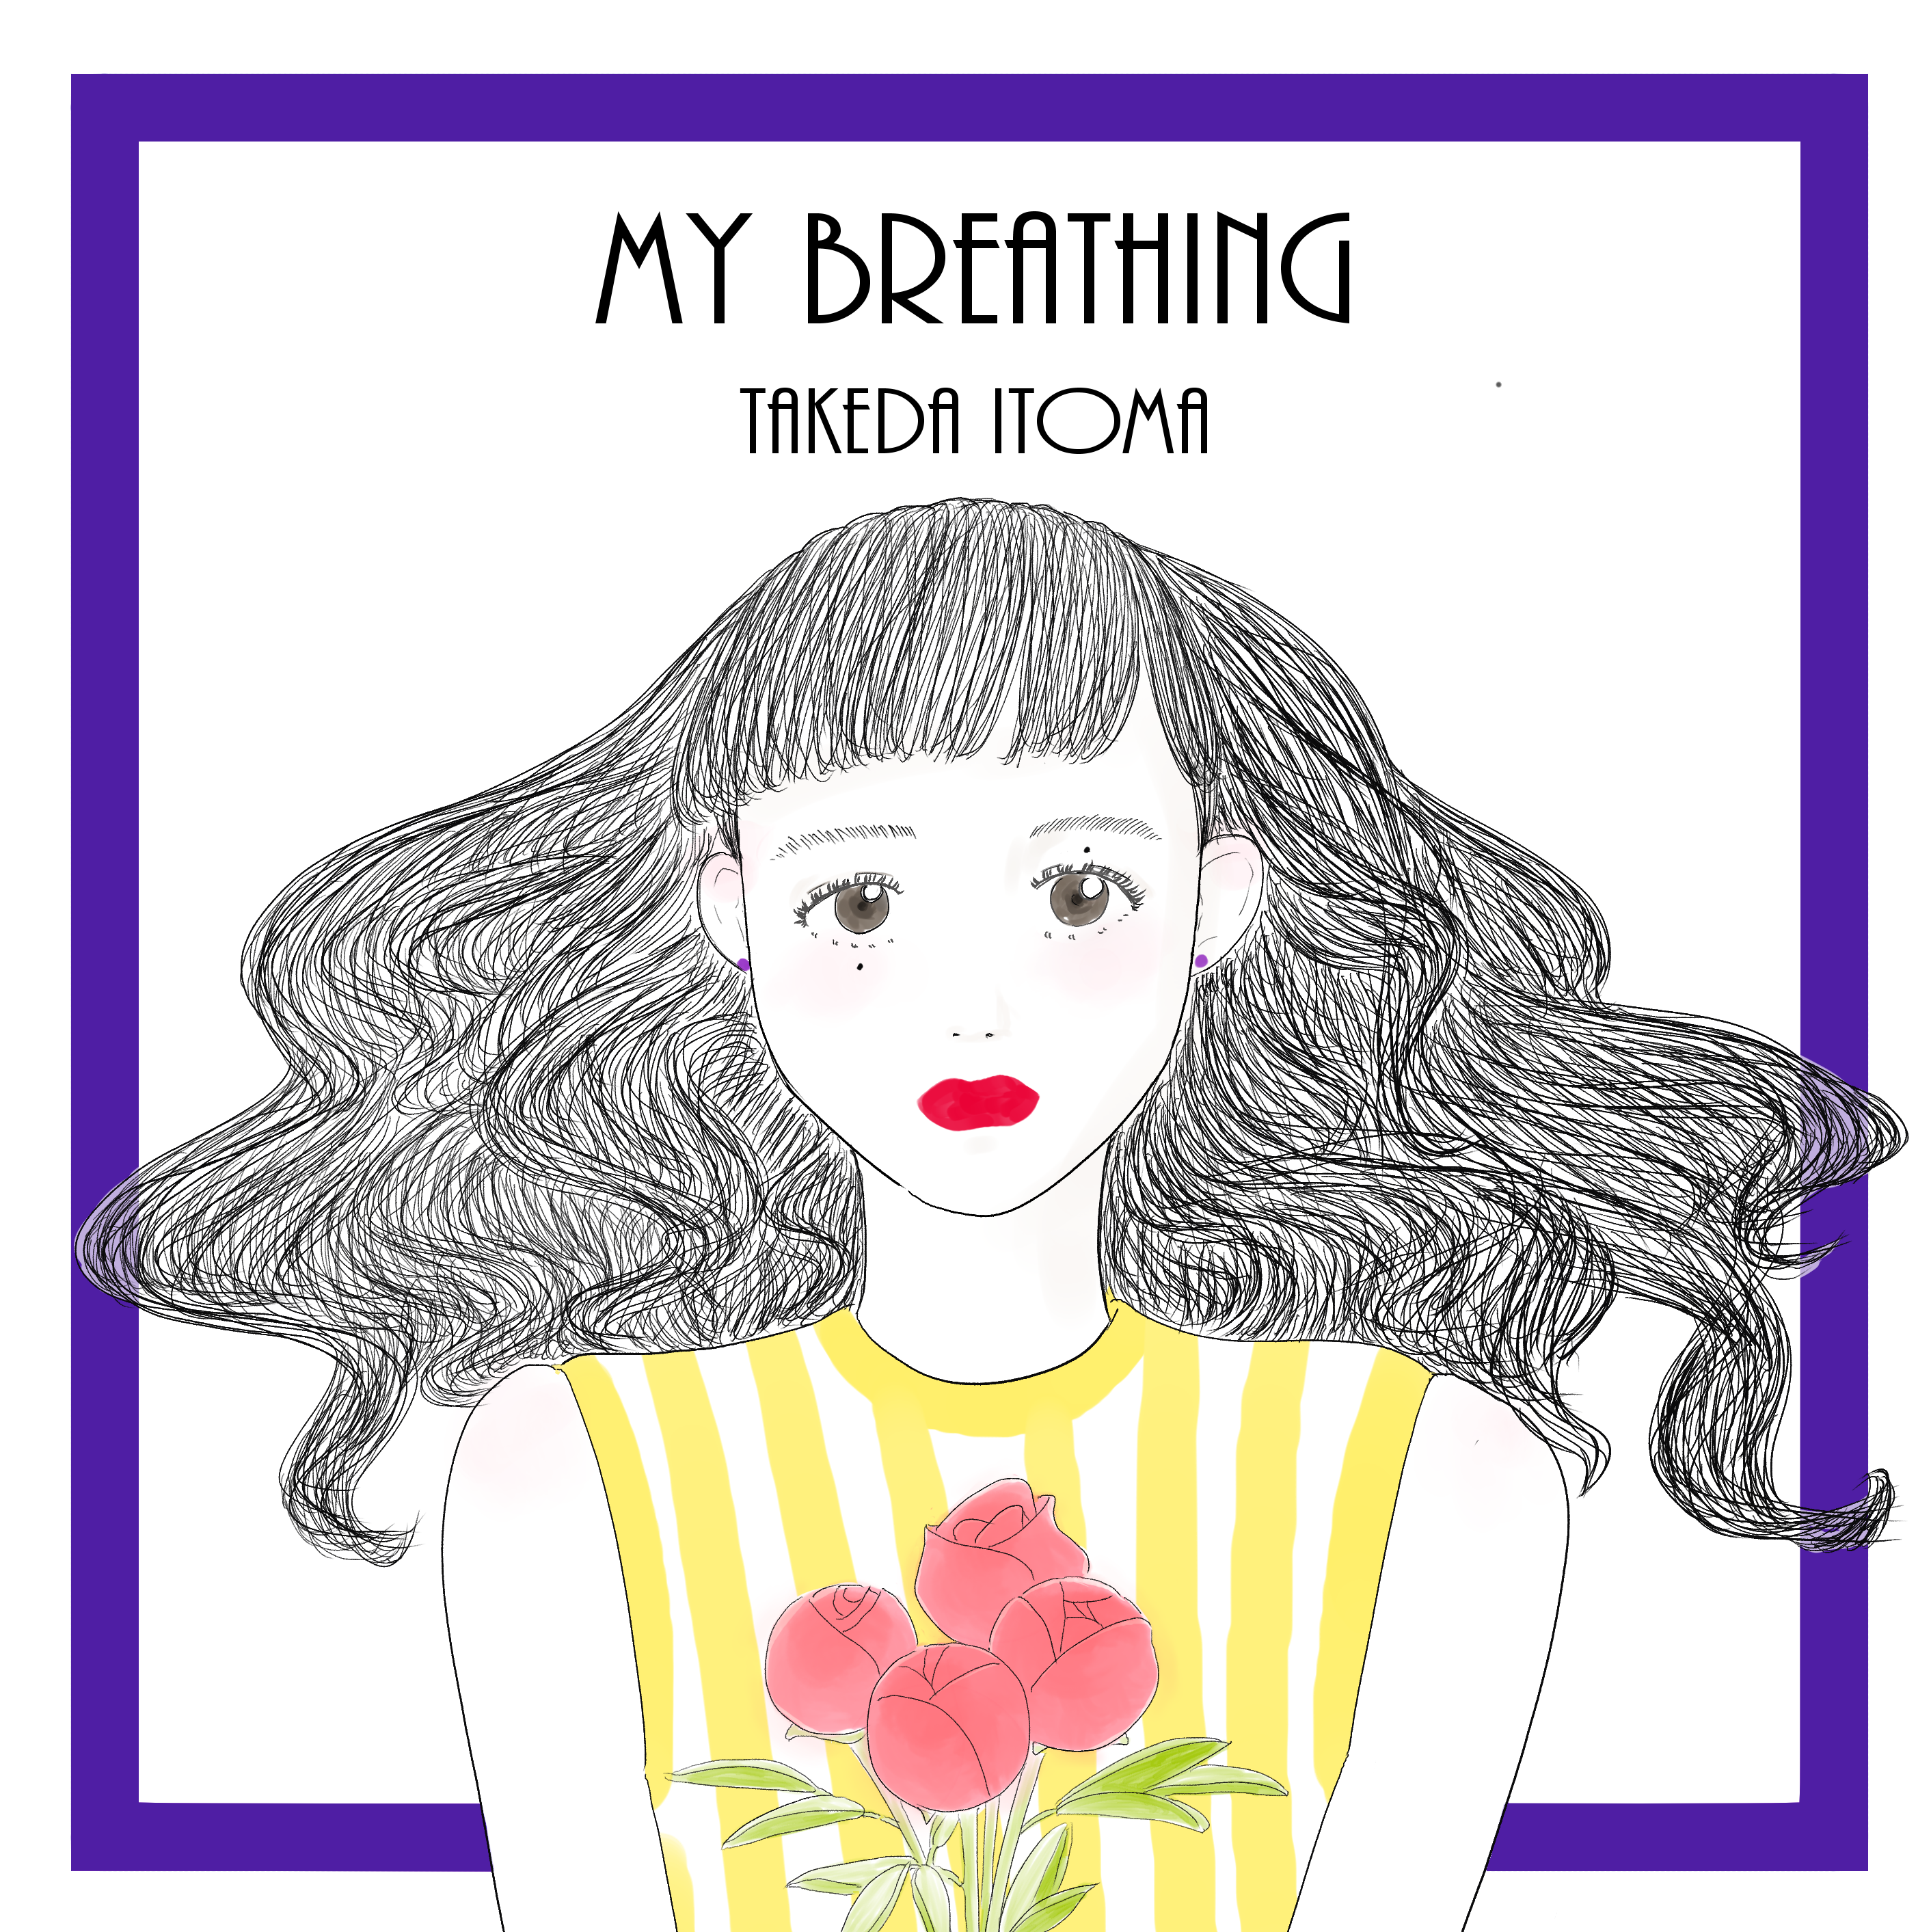 【竹田糸摩】2nd Single "MY BREATHING"